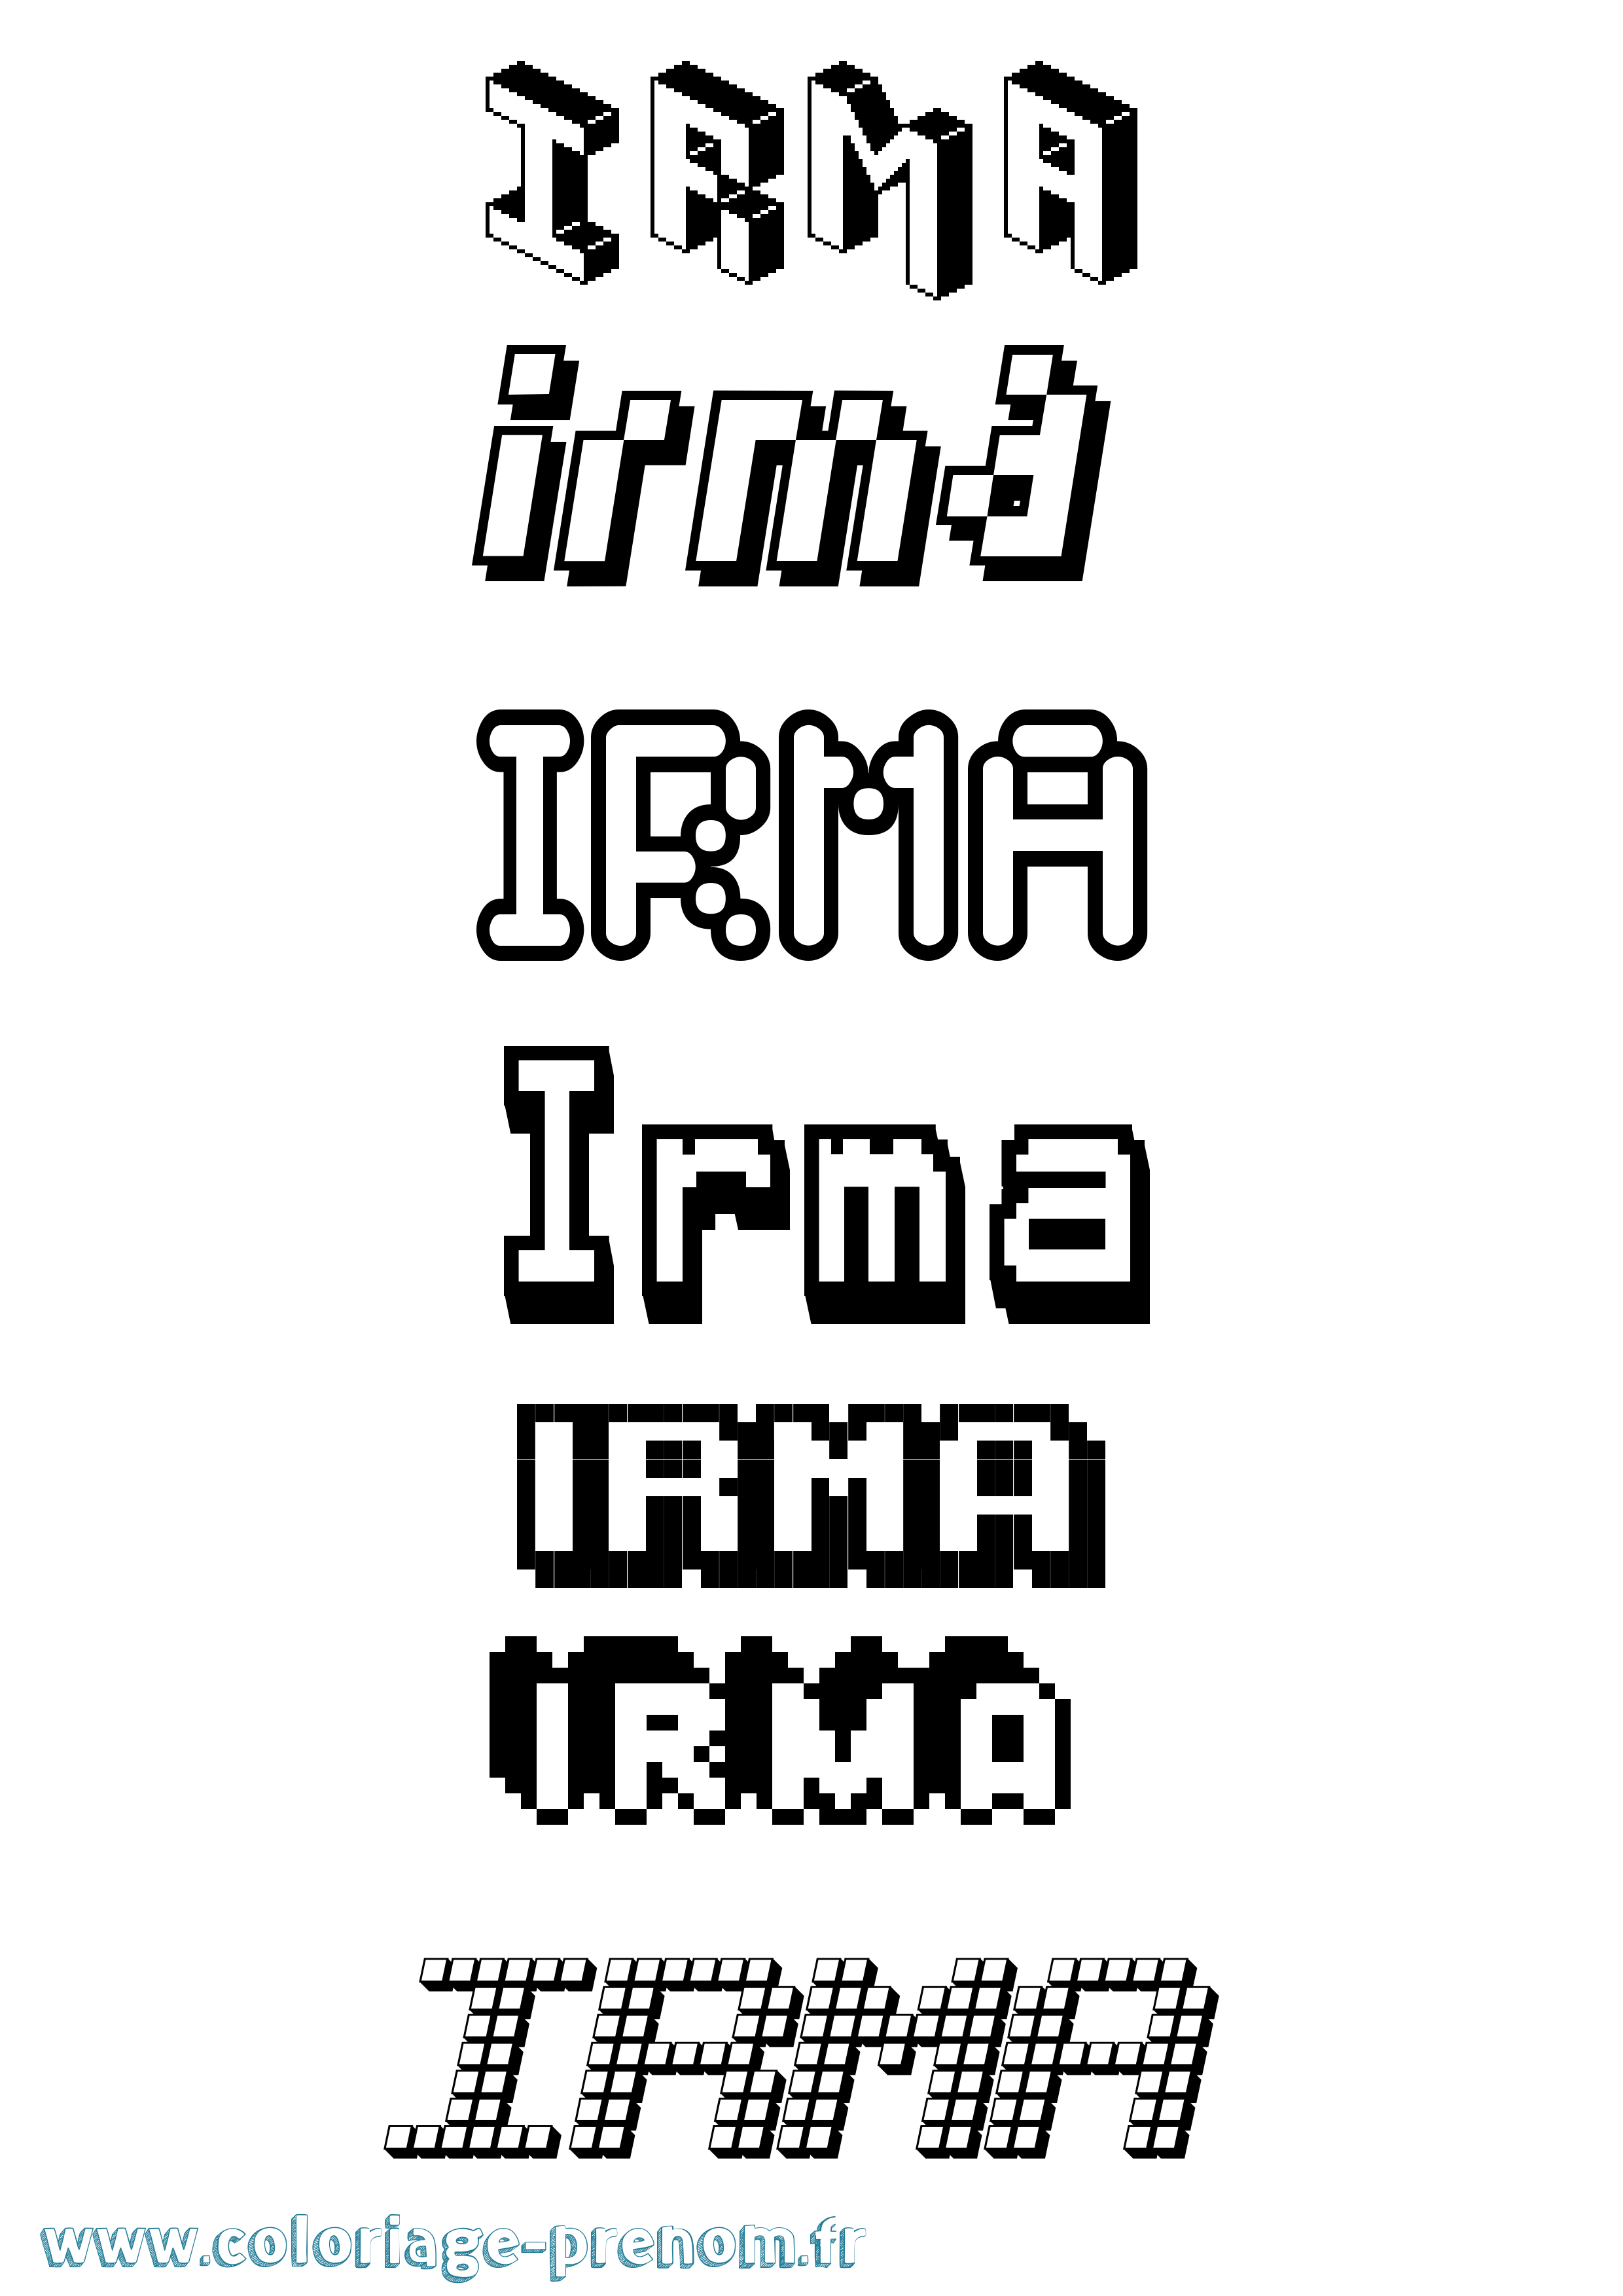 Coloriage prénom Irma Pixel